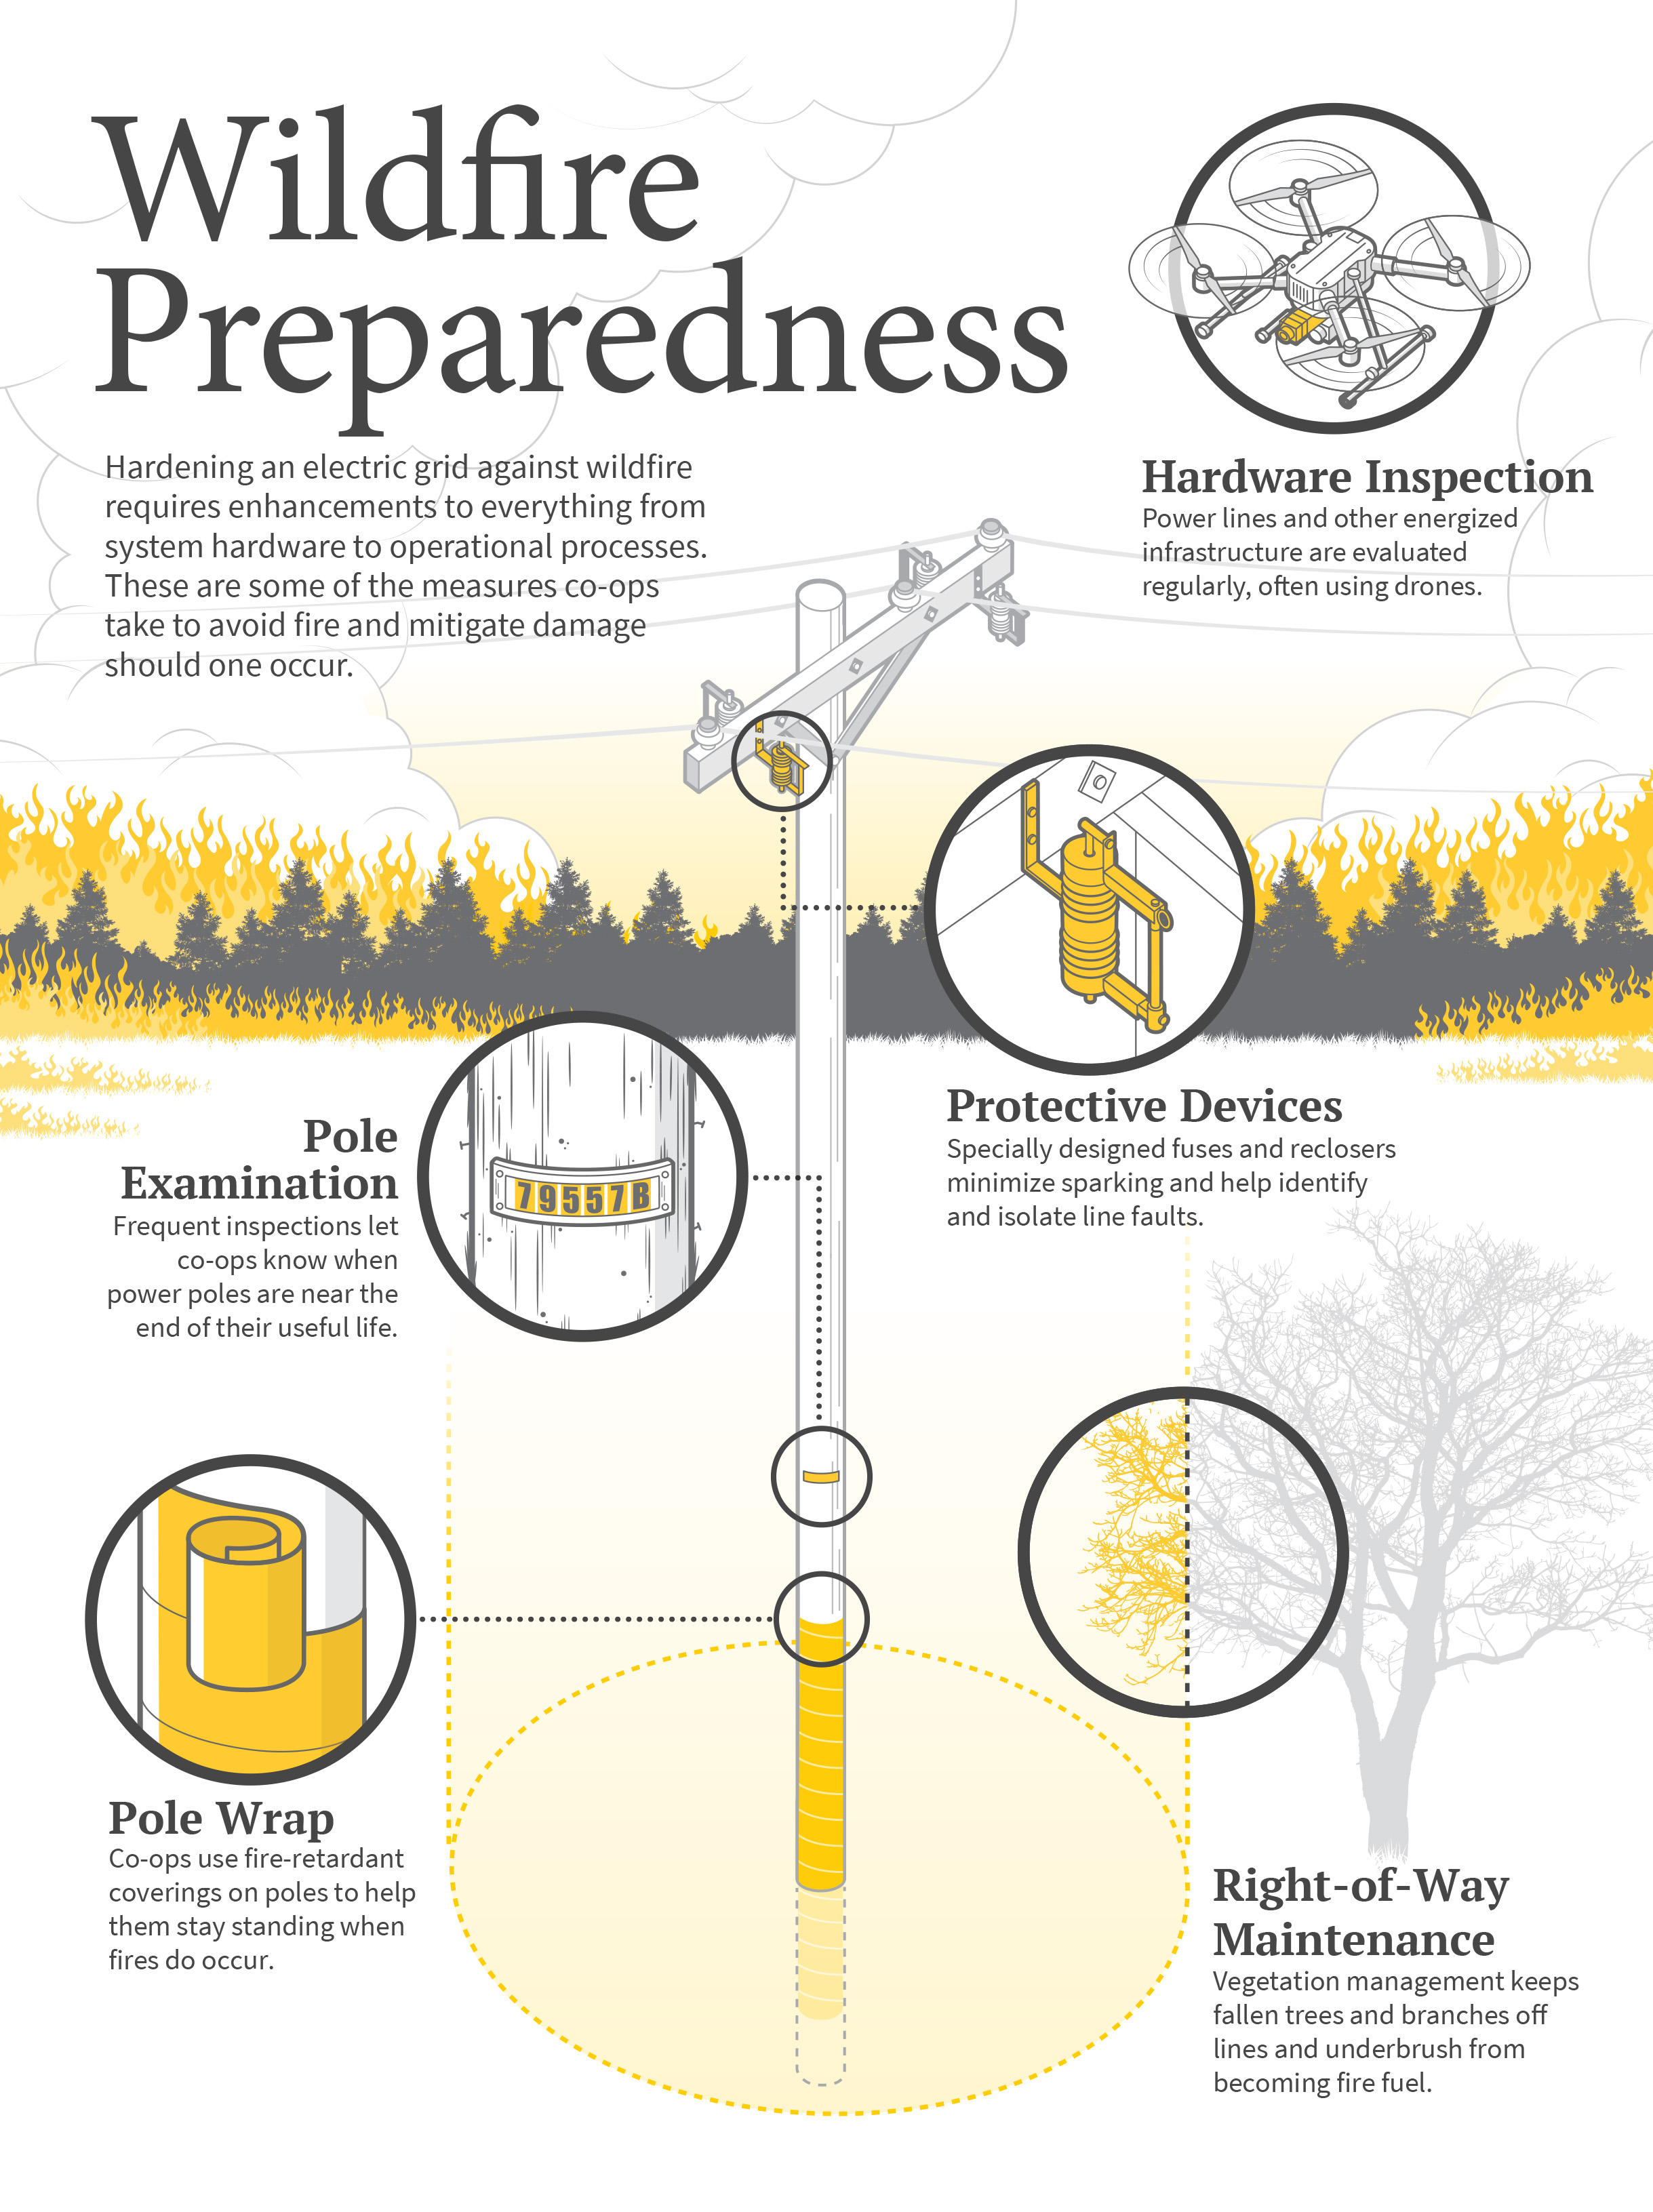 Wildfire Preparedness Measures Graphic